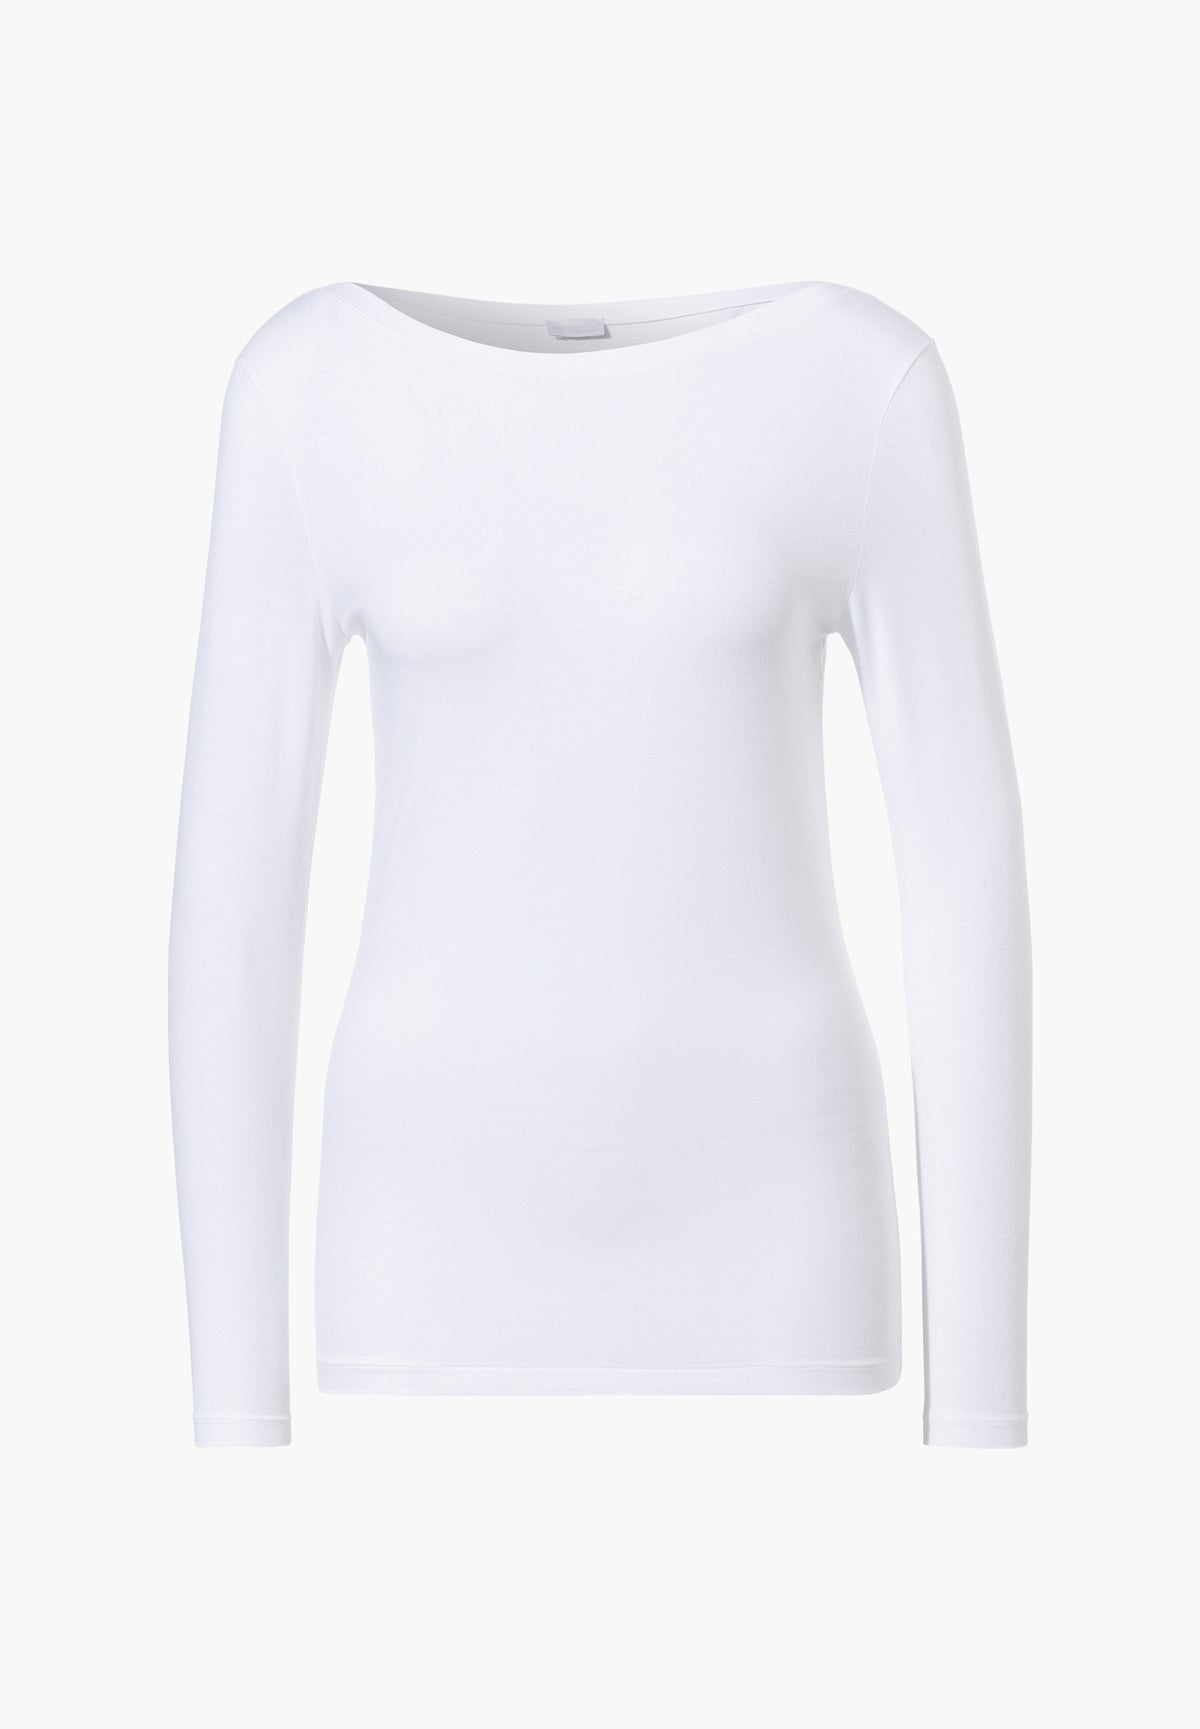 Pureness | T-Shirt Long Sleeve - white